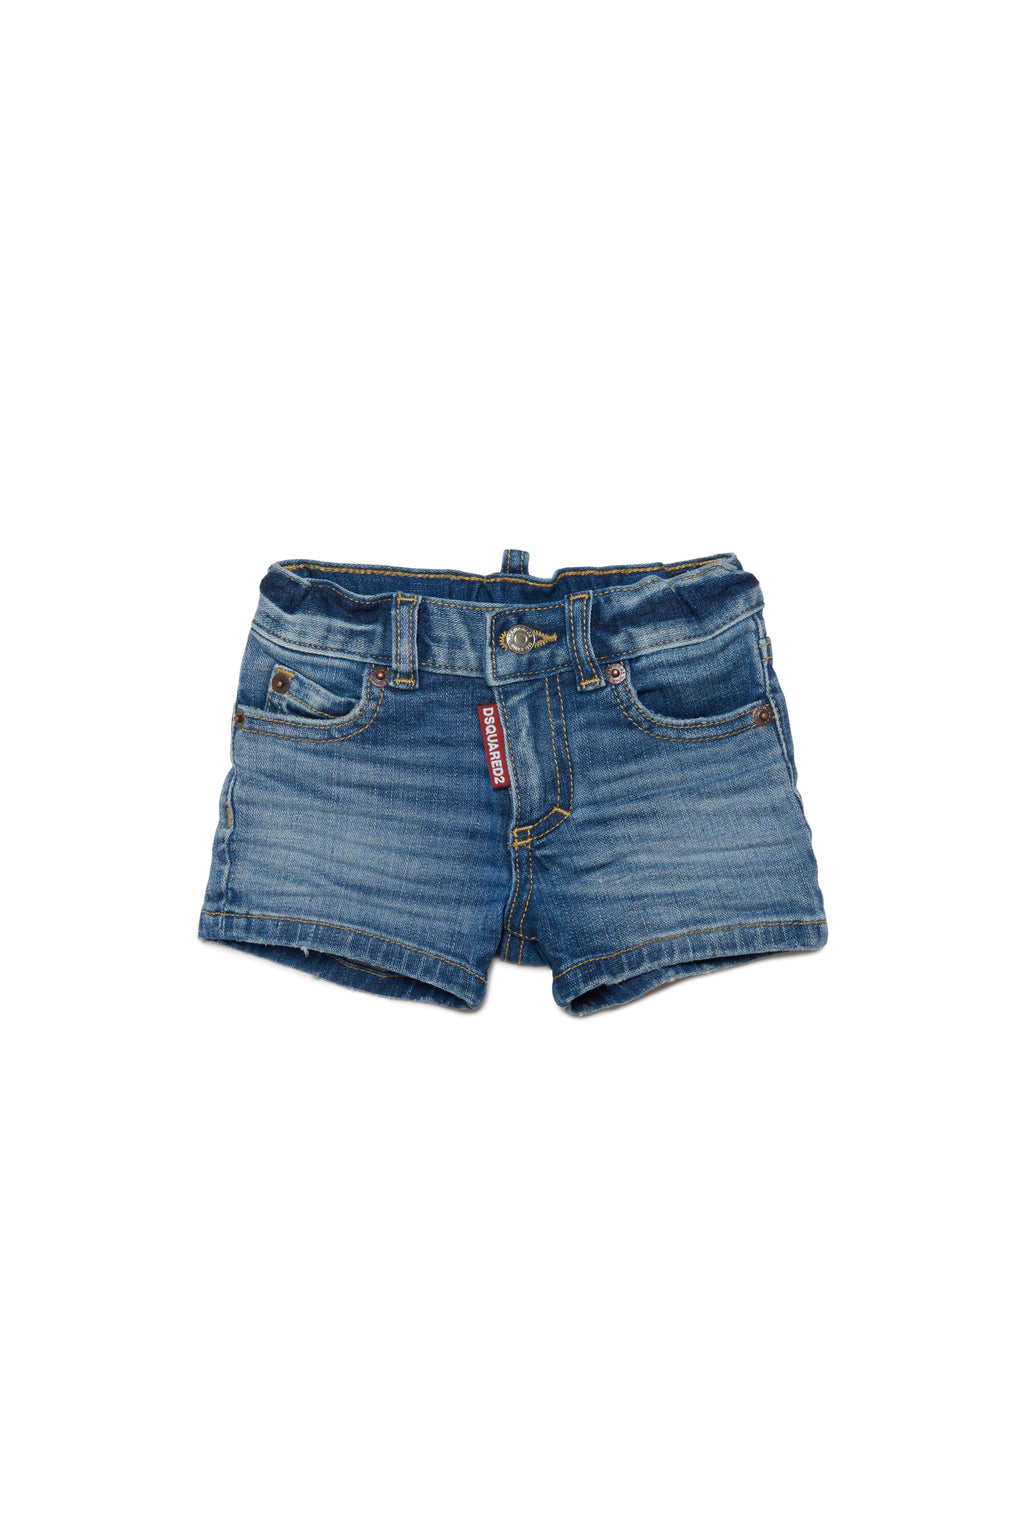 Blue gradient denim shorts